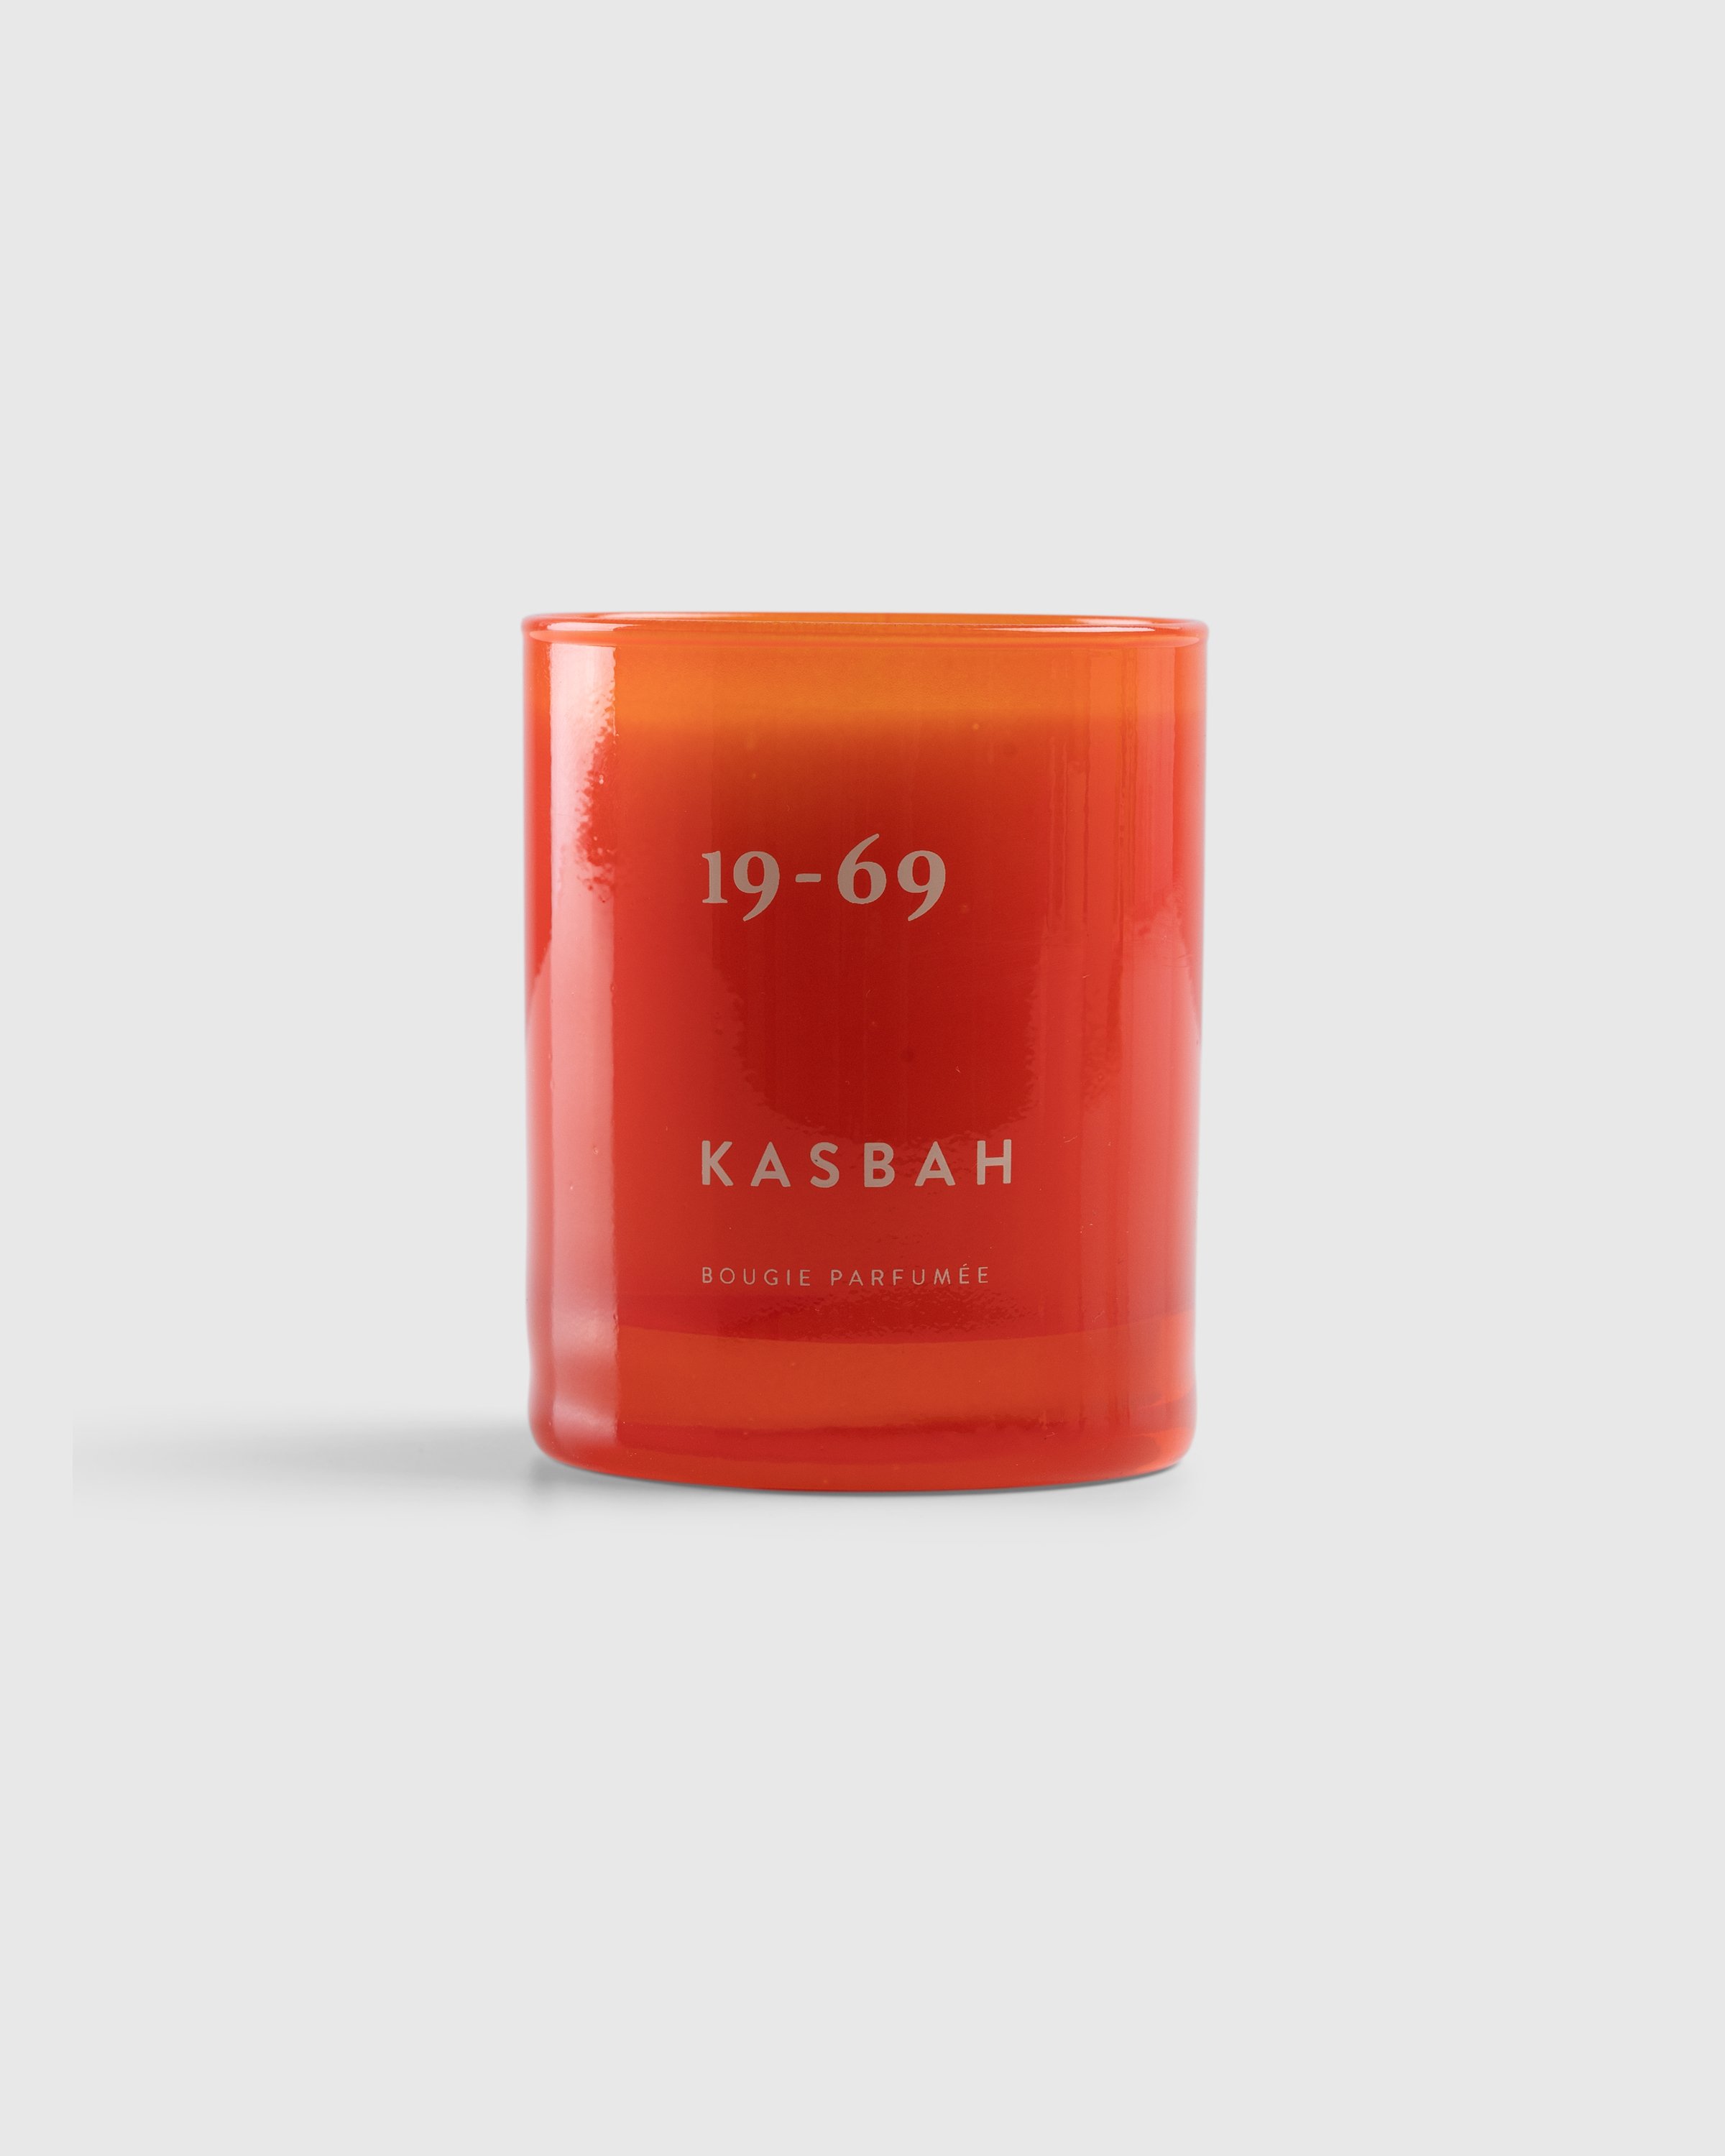 19-69 - Kasbah BP Candle - Lifestyle - Orange - Image 1